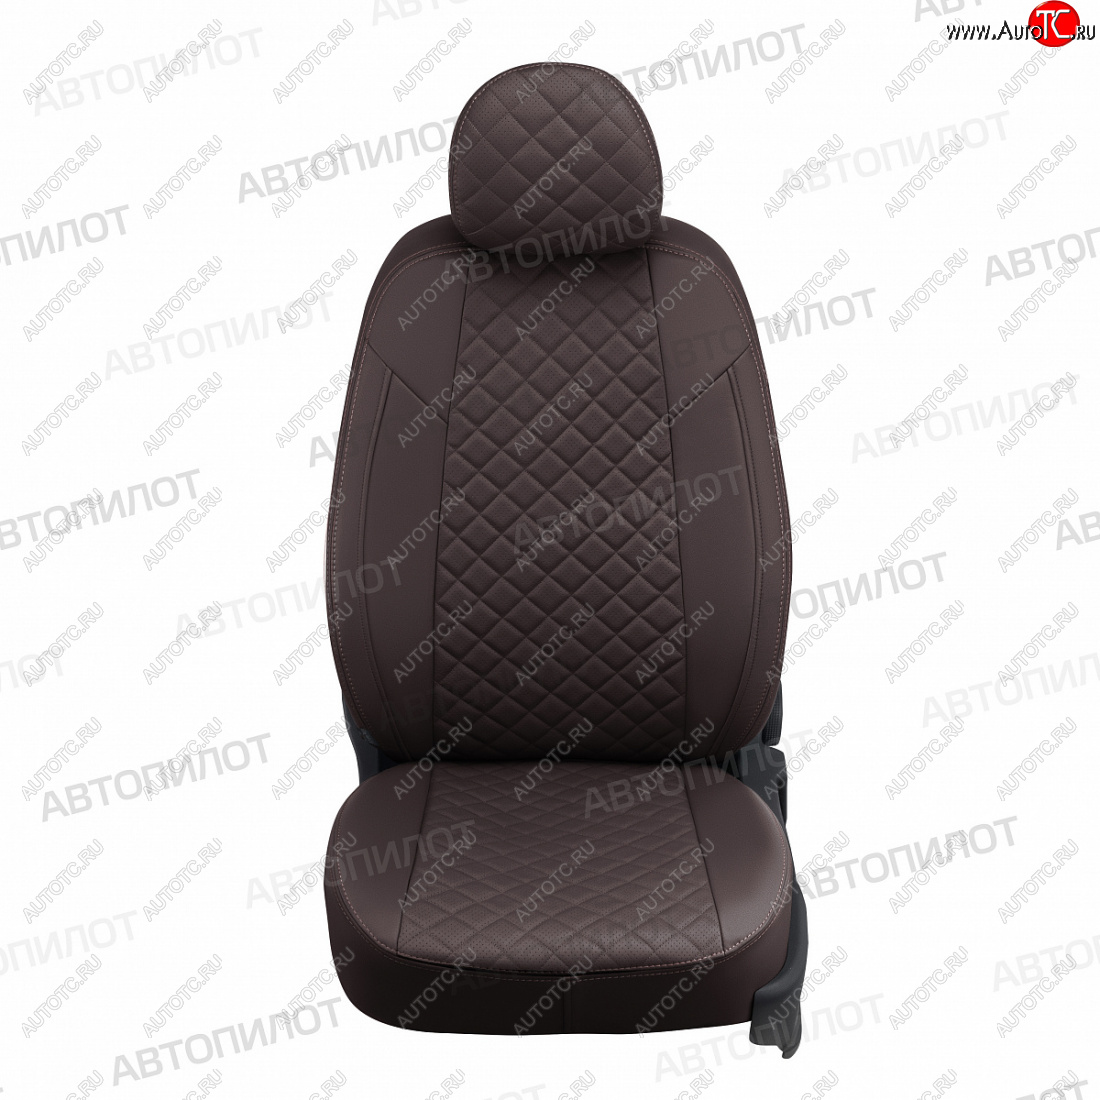 13 999 р. Чехлы сидений (экокожа) Автопилот Ромб  Hyundai Elantra ( XD,  XD2) (2000-2010) (шоколад)